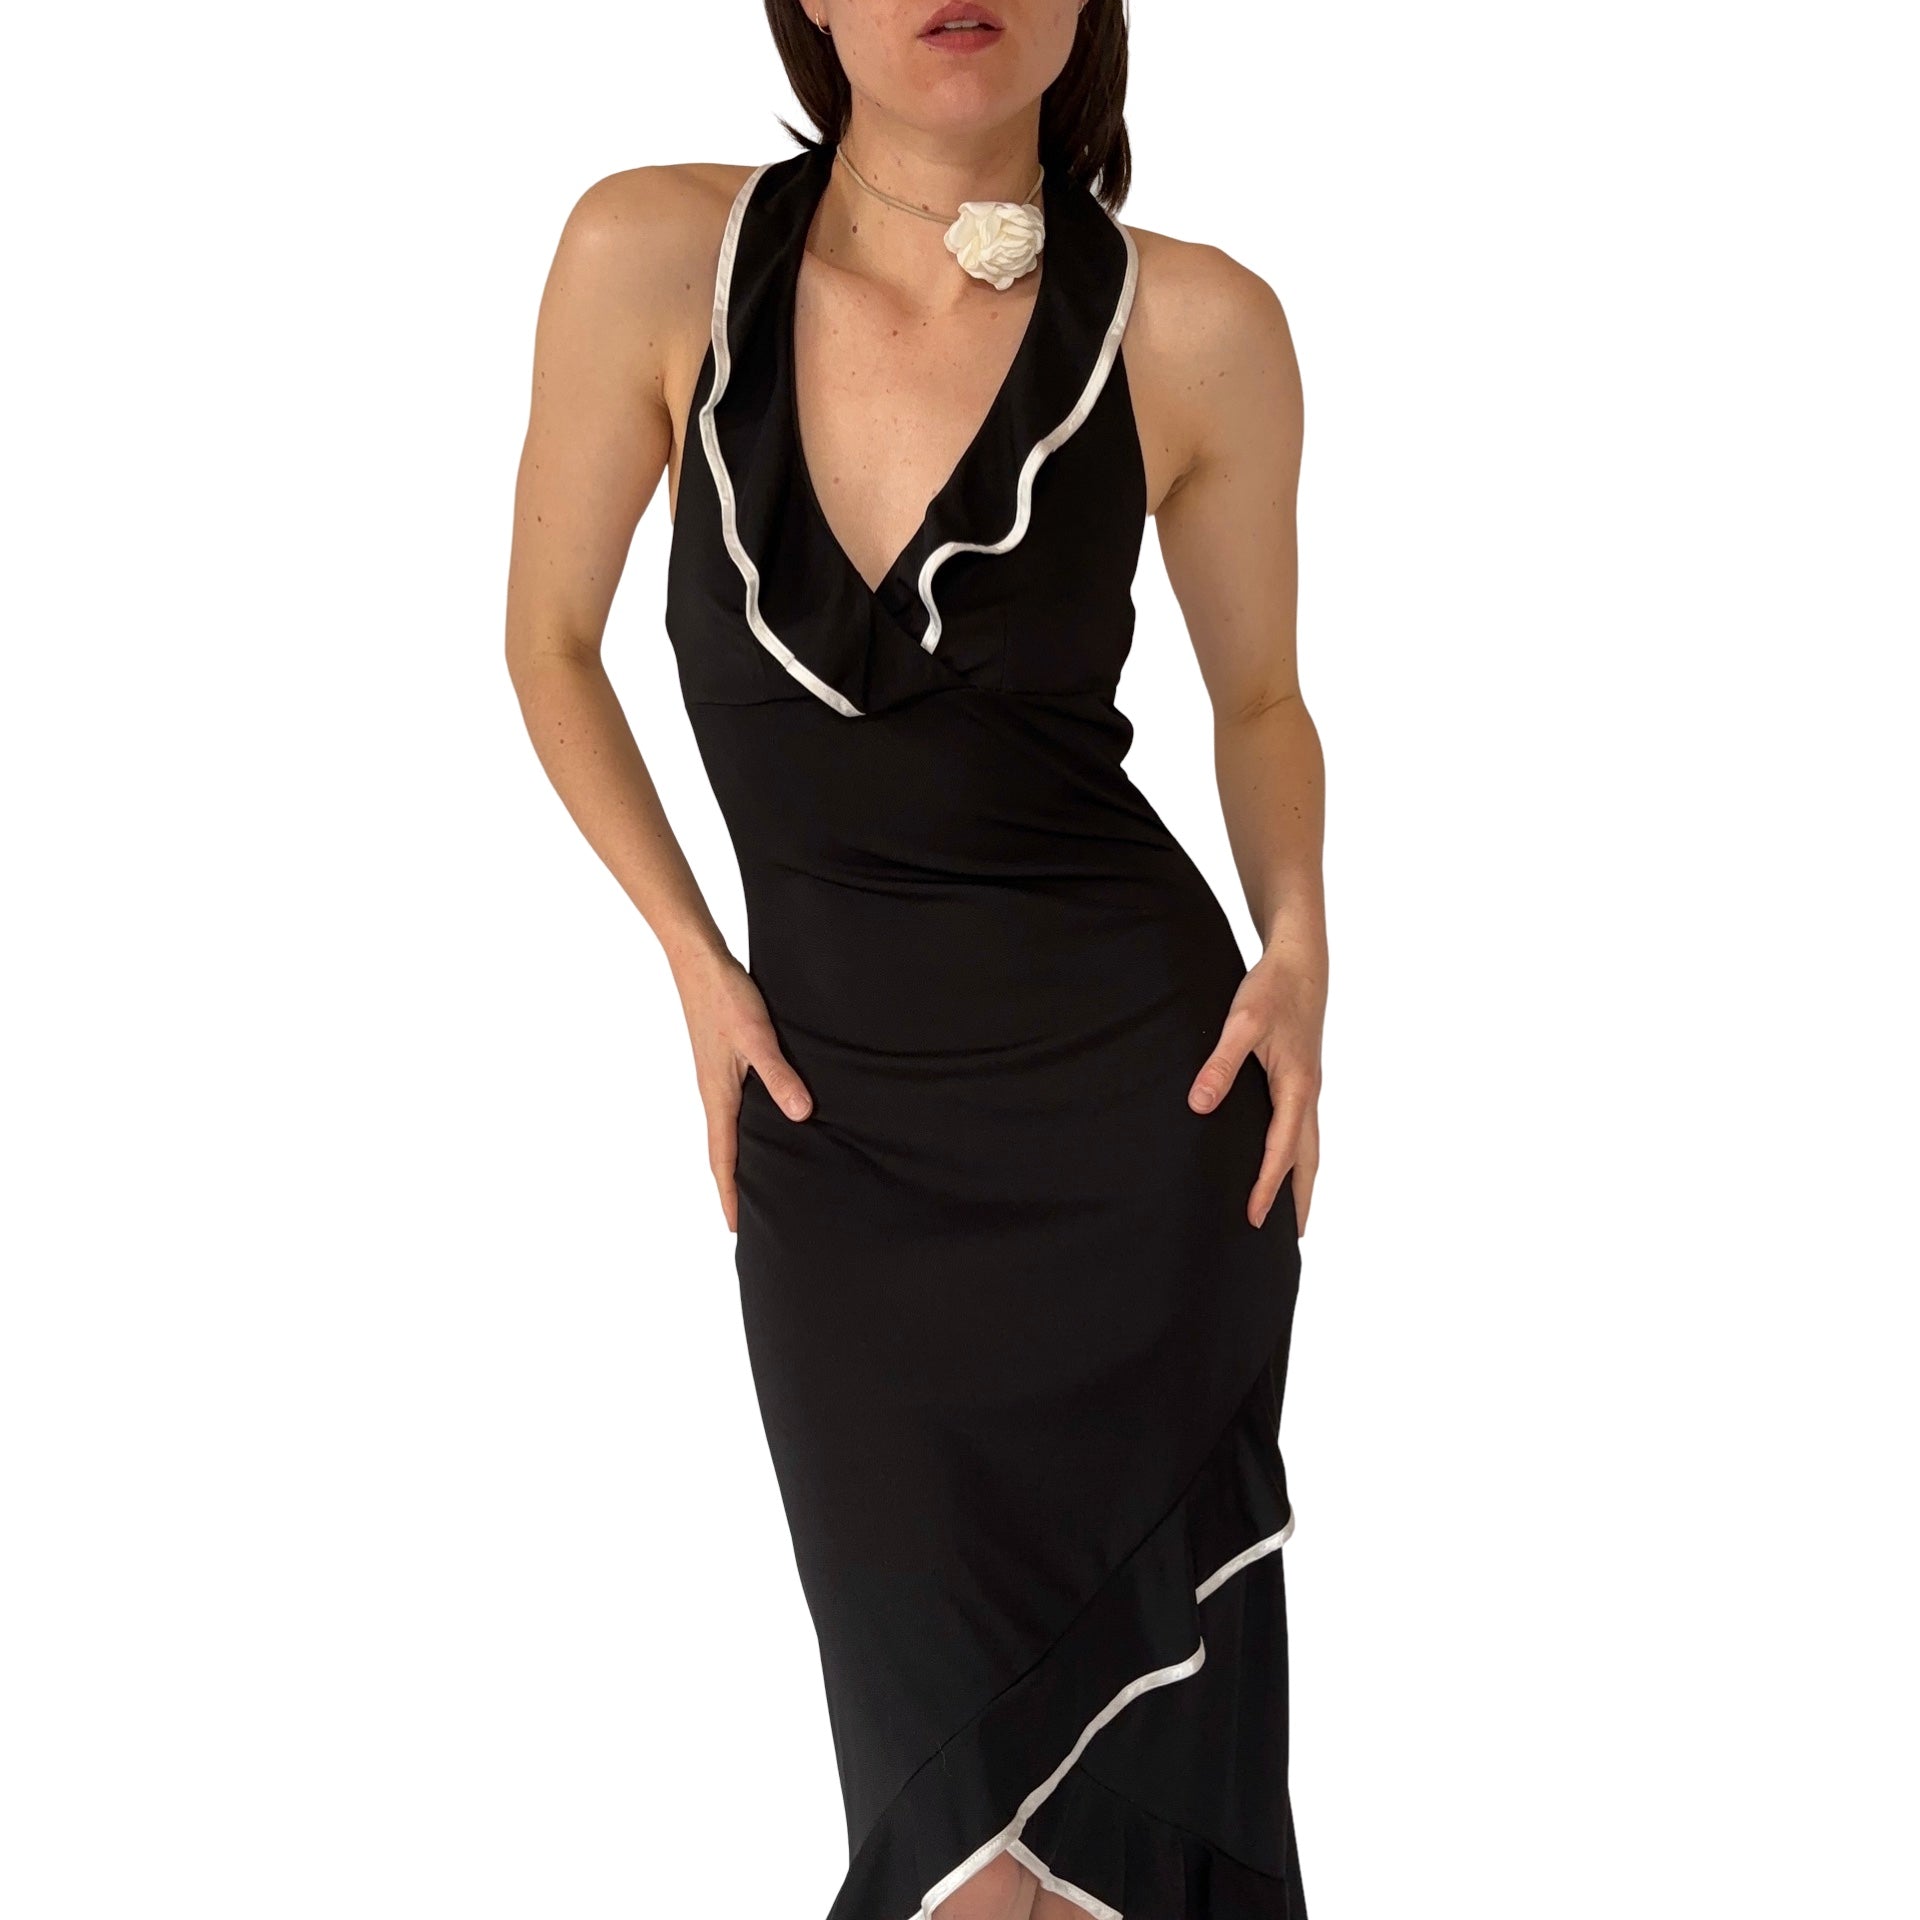 2000s Cocktail Dress (XS/S)